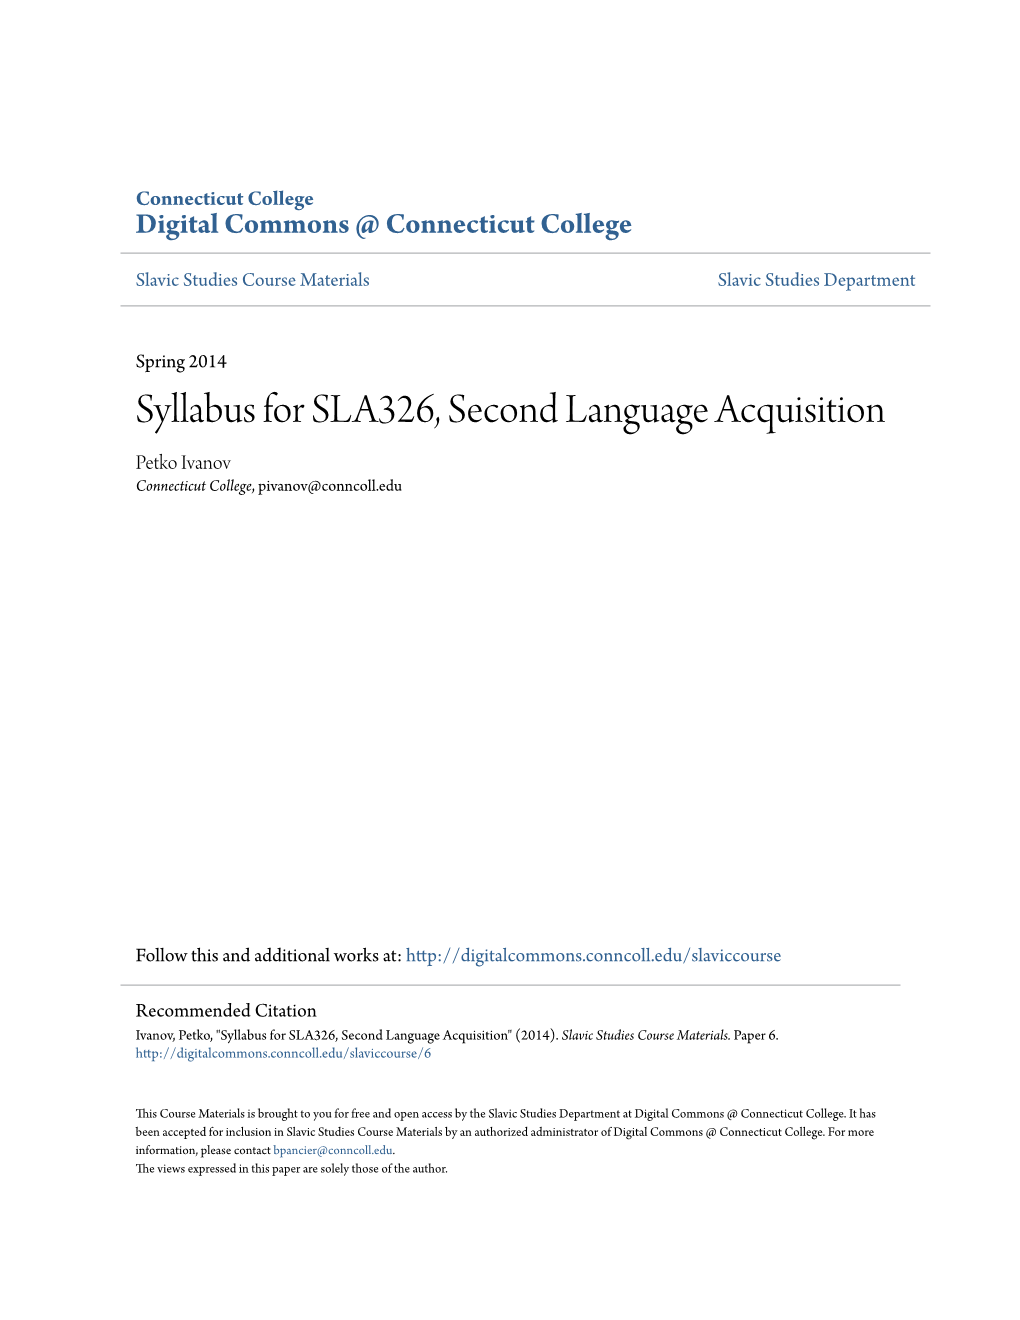 Syllabus for SLA326, Second Language Acquisition Petko Ivanov Connecticut College, Pivanov@Conncoll.Edu